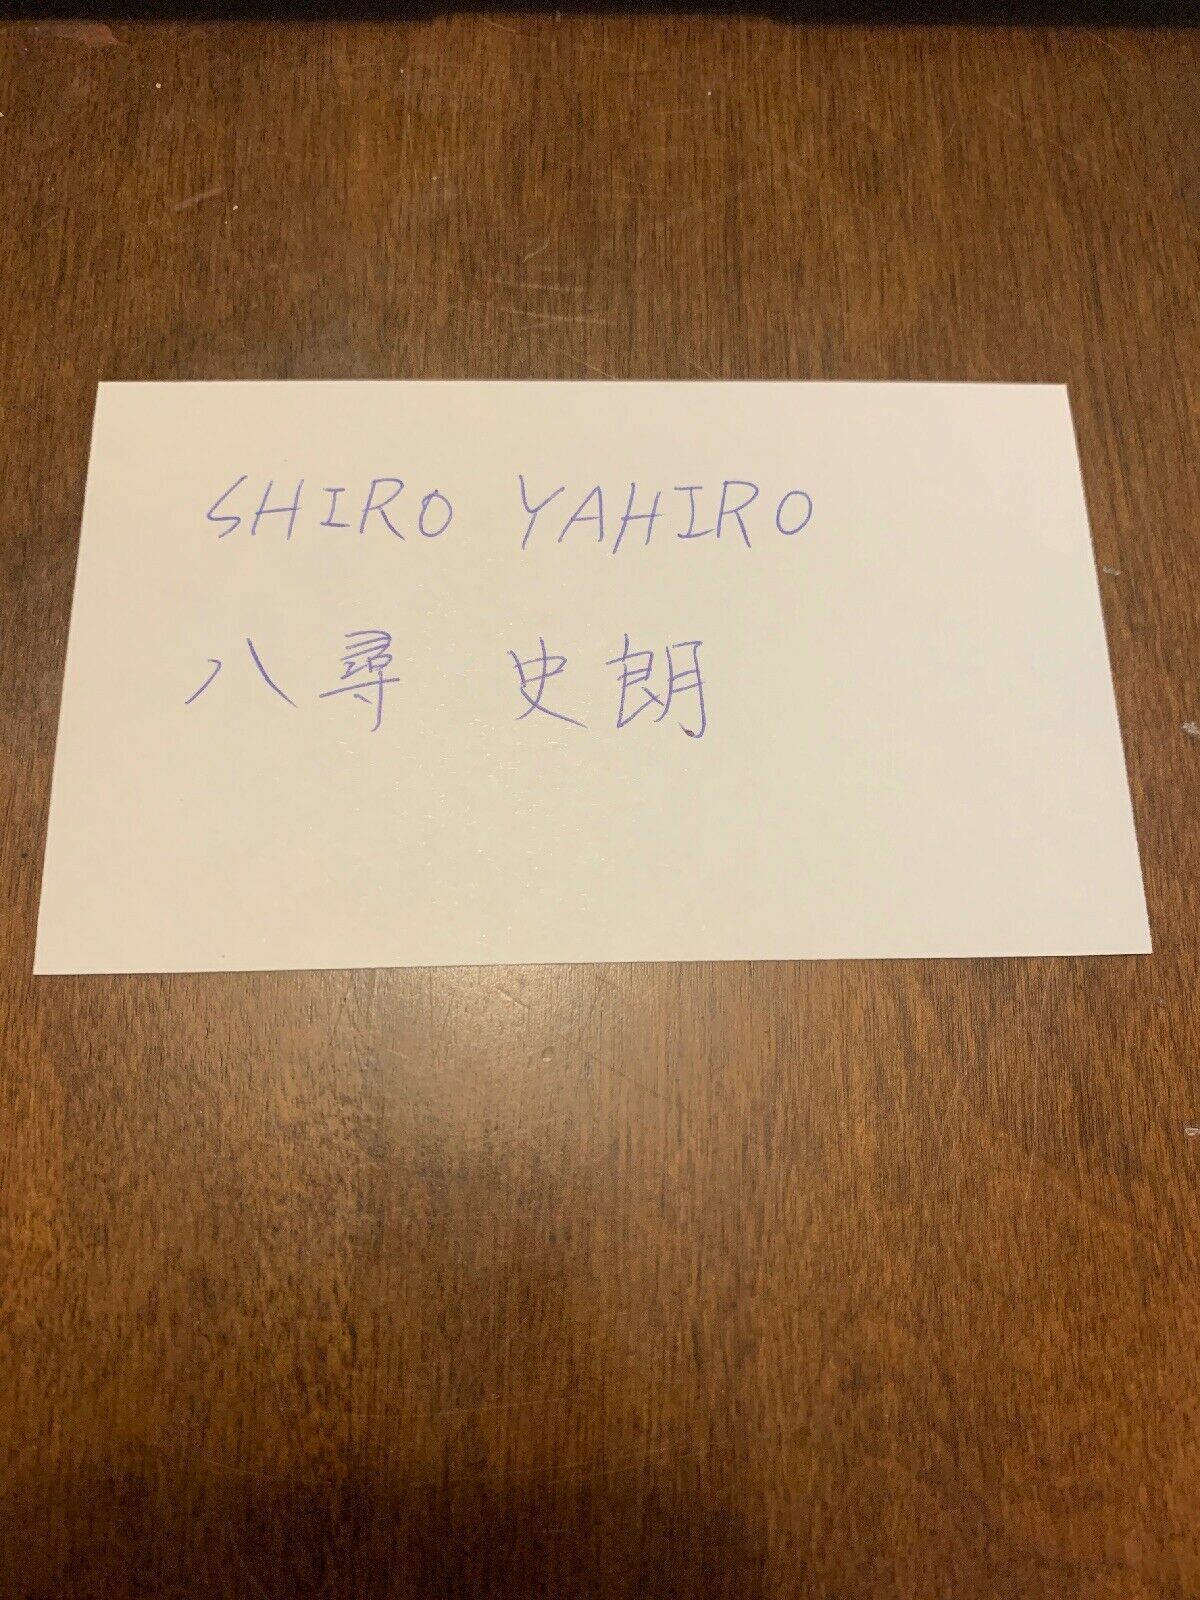 SHIRO YAHIRO - BOXER - AUTHENTIC AUTOGRAPH SIGNED- B5679